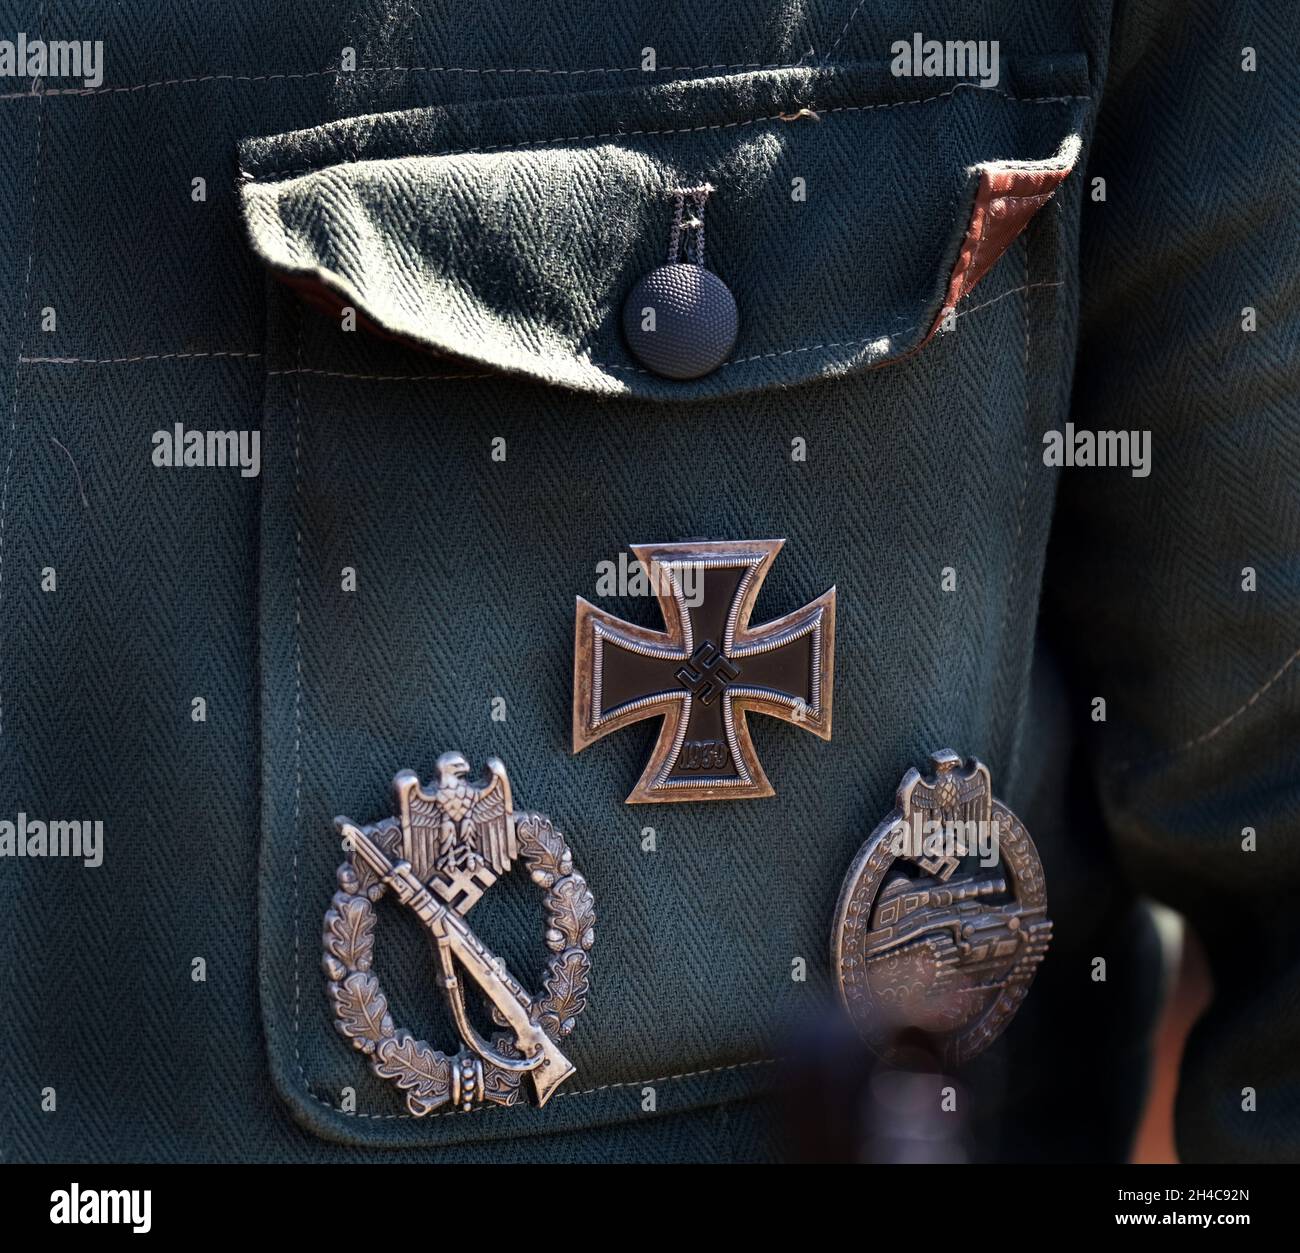 German second world war awards and badges on uniform pocket. Stock Photo